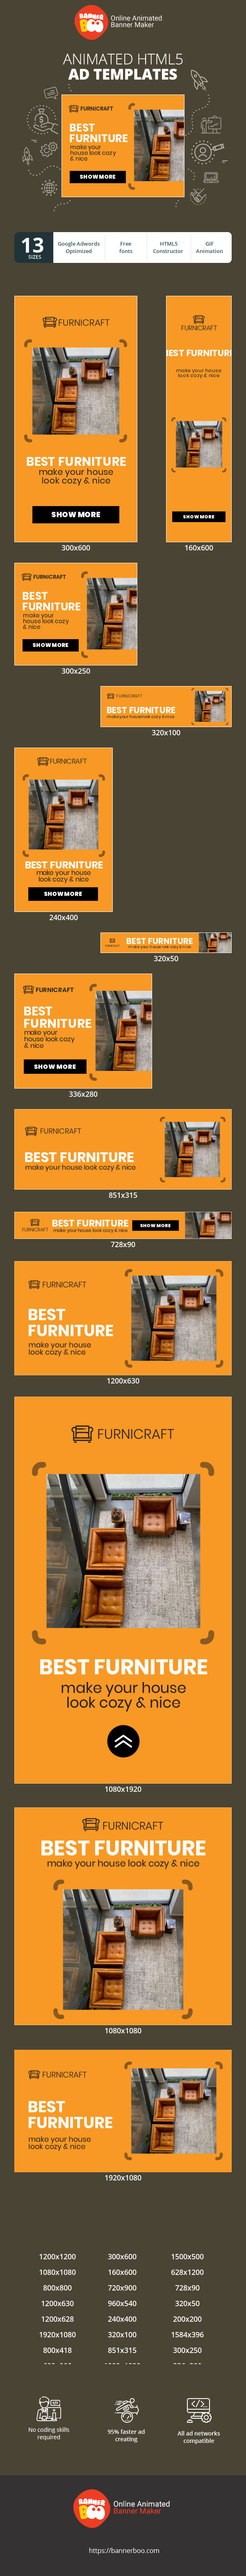 Шаблон рекламного банера — Best Furniture — Make Your House Look Cozy & Nice